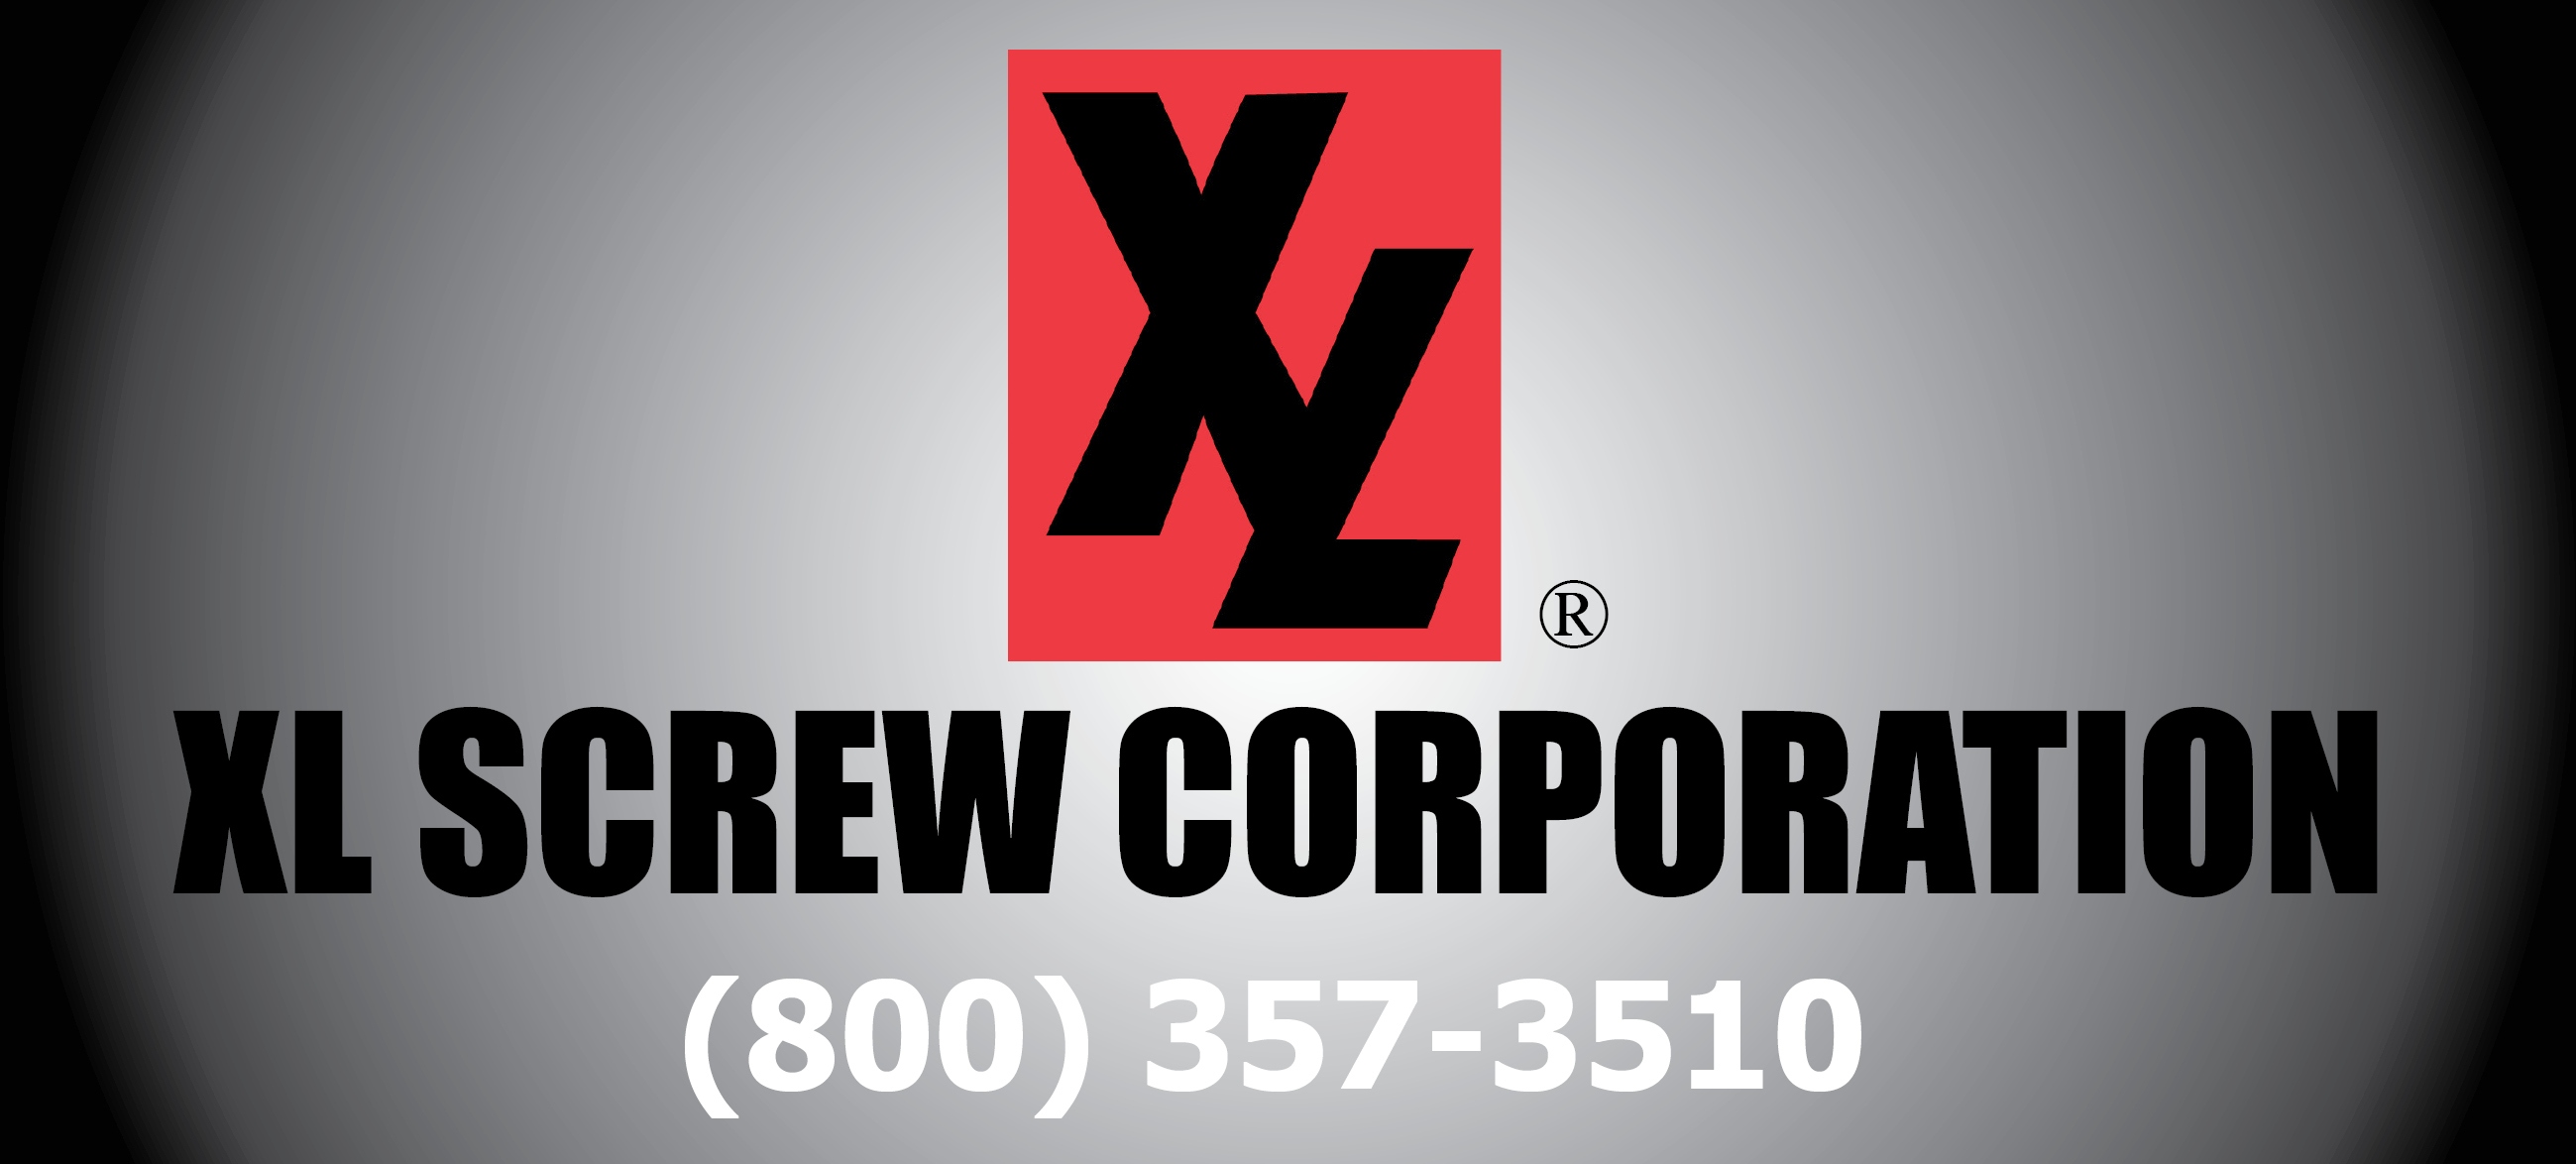 XL Screw Corporation